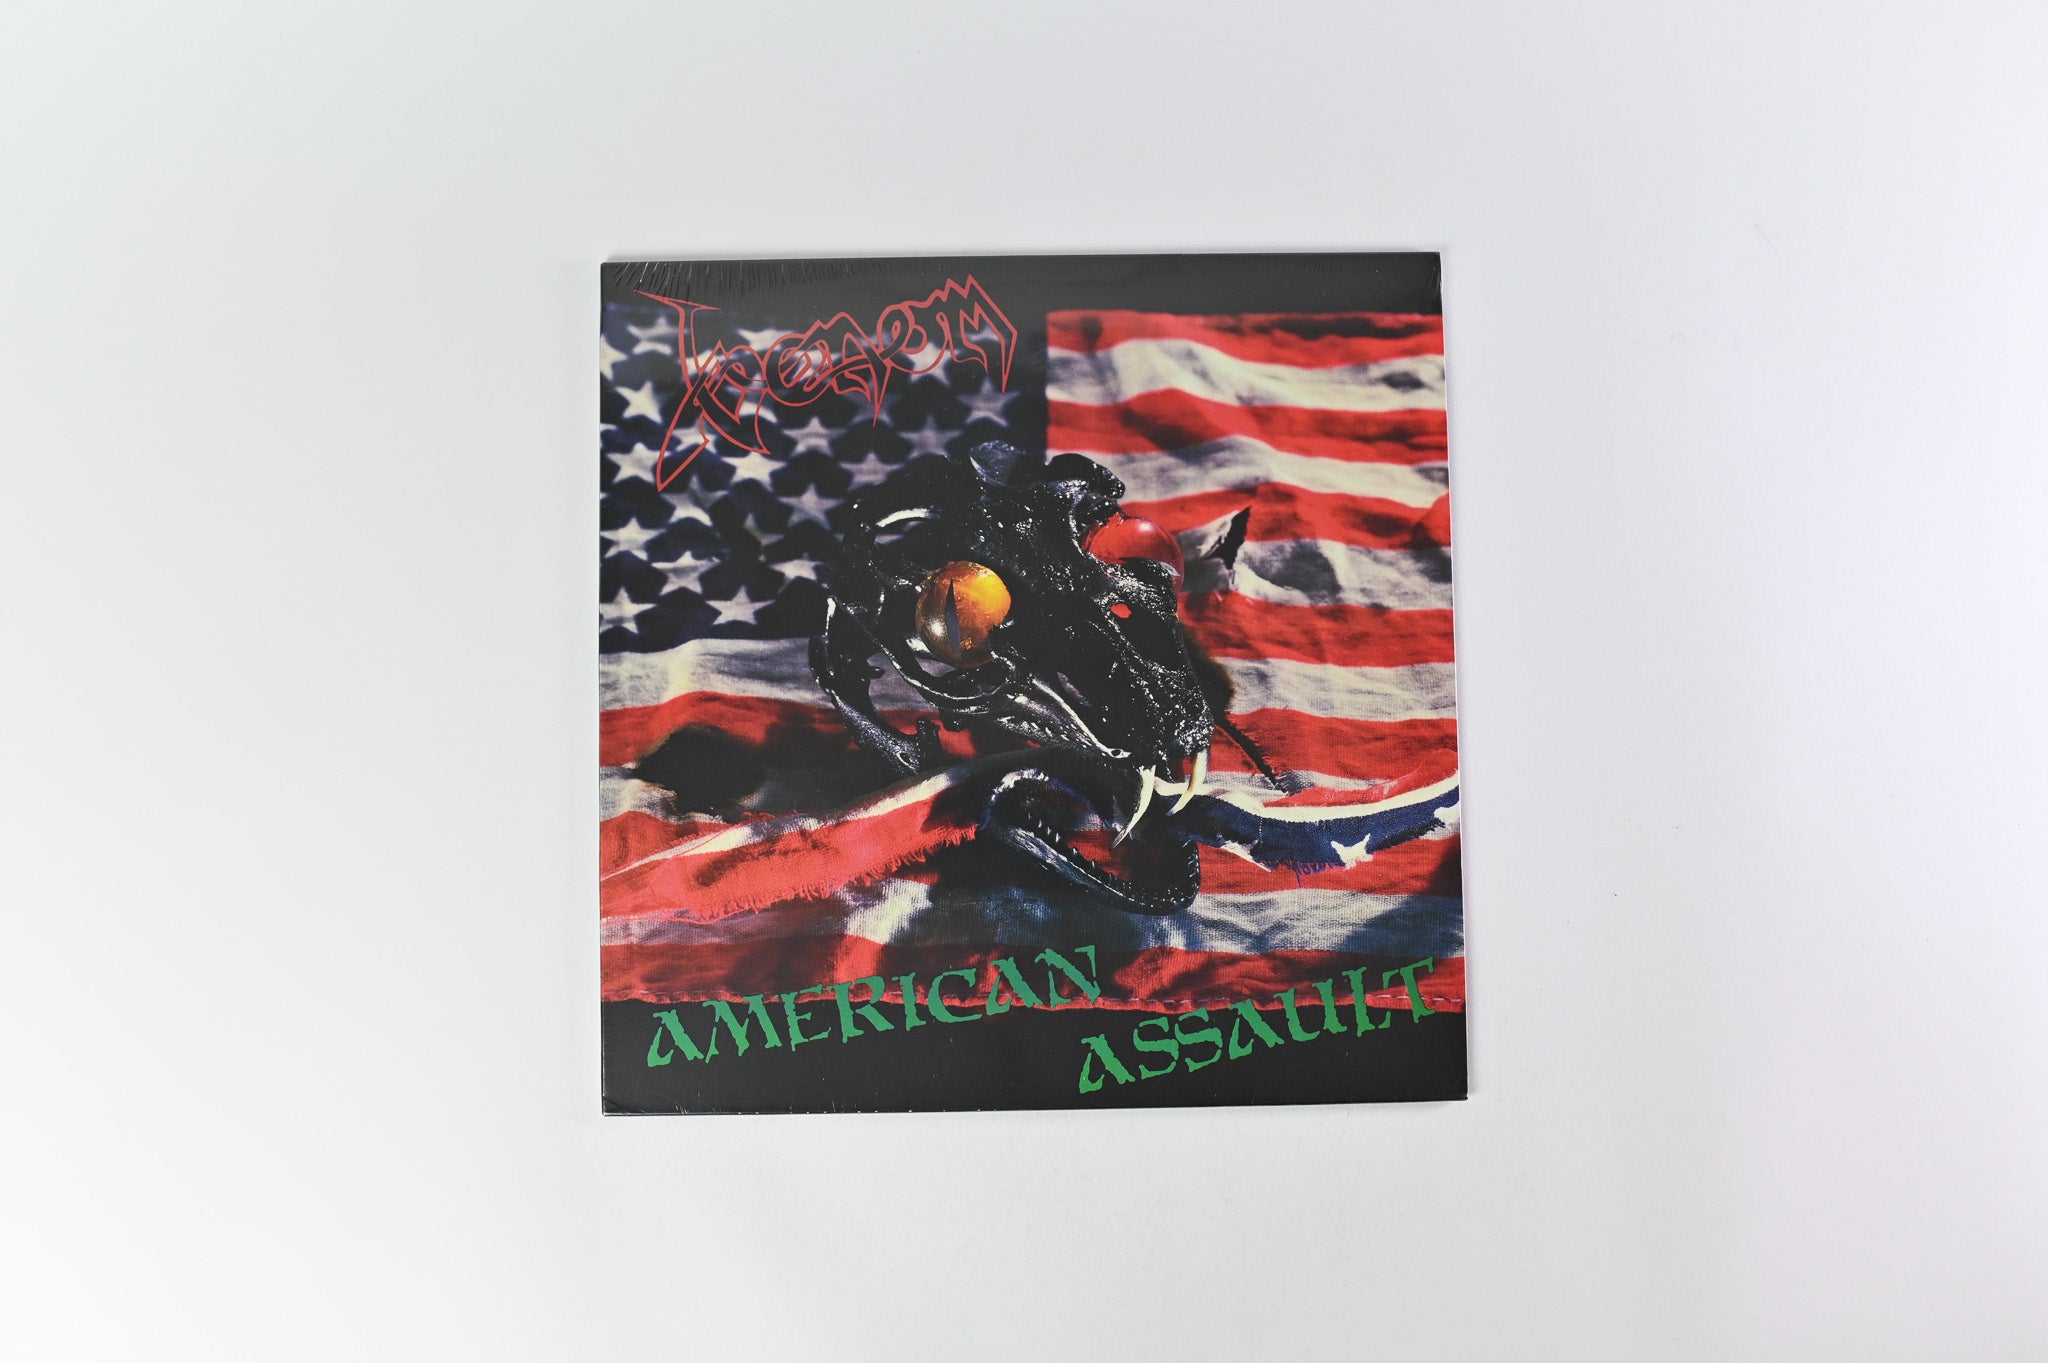 Venom - American Assault on Back on Black Red With Blue Splatter Vinyl Reissue Sealed